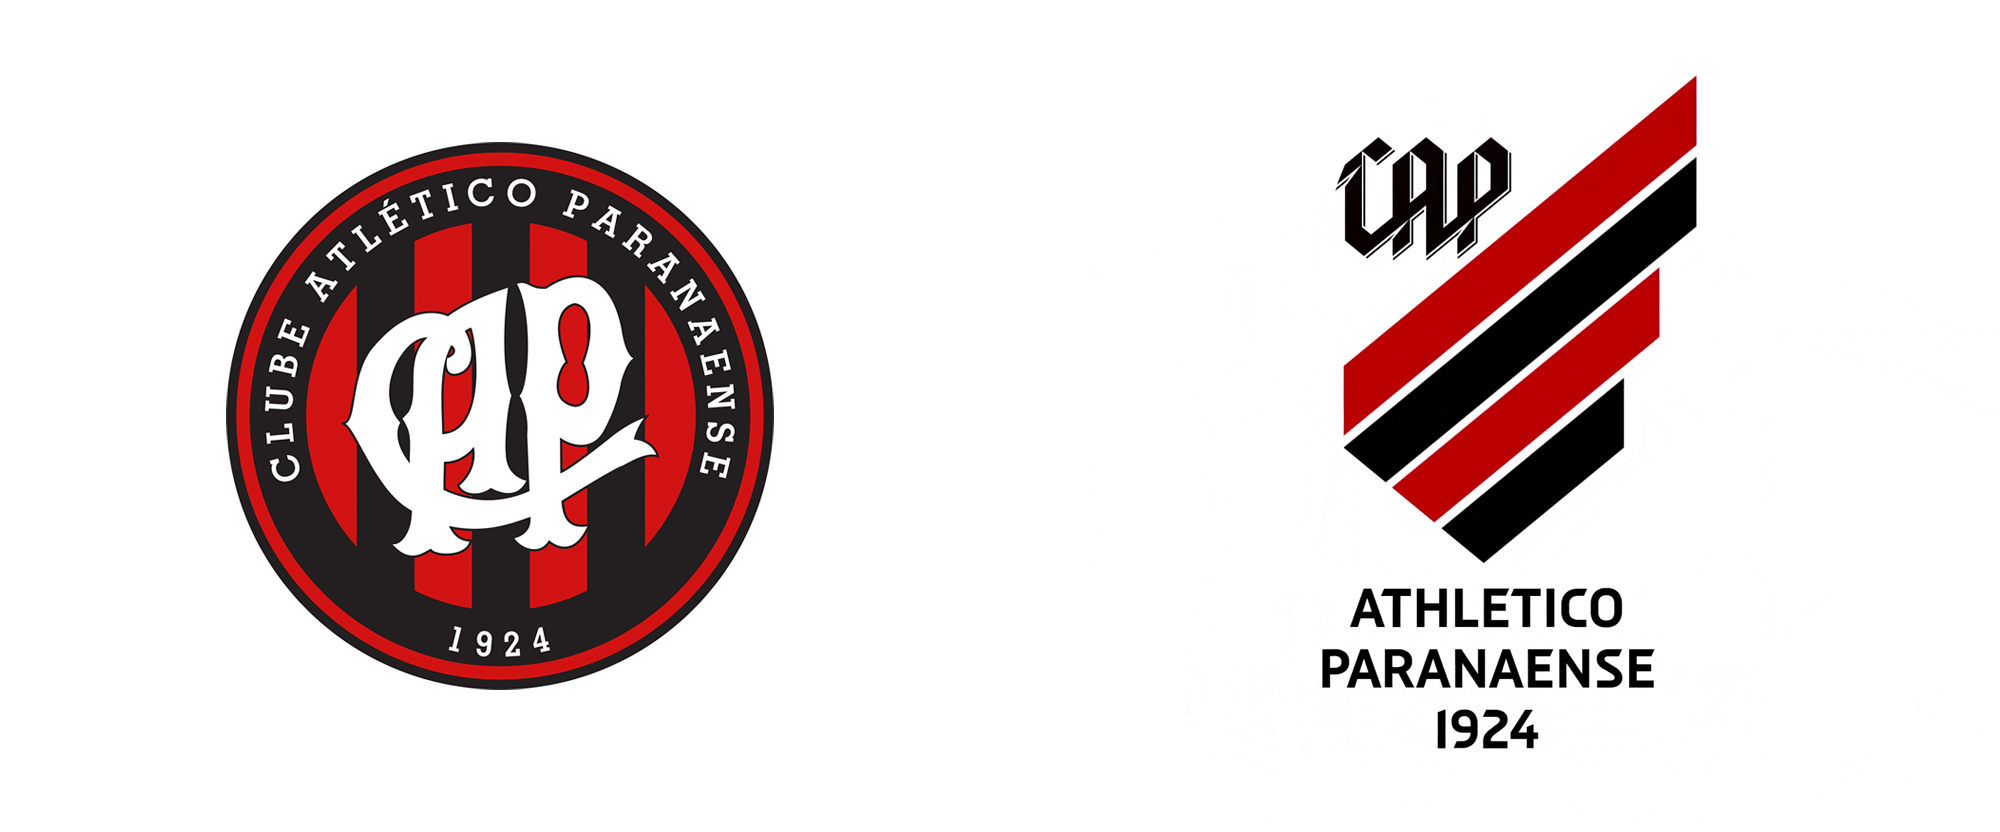 Brand New New Logo And Identity For Club Athletico Paranaense By Oz